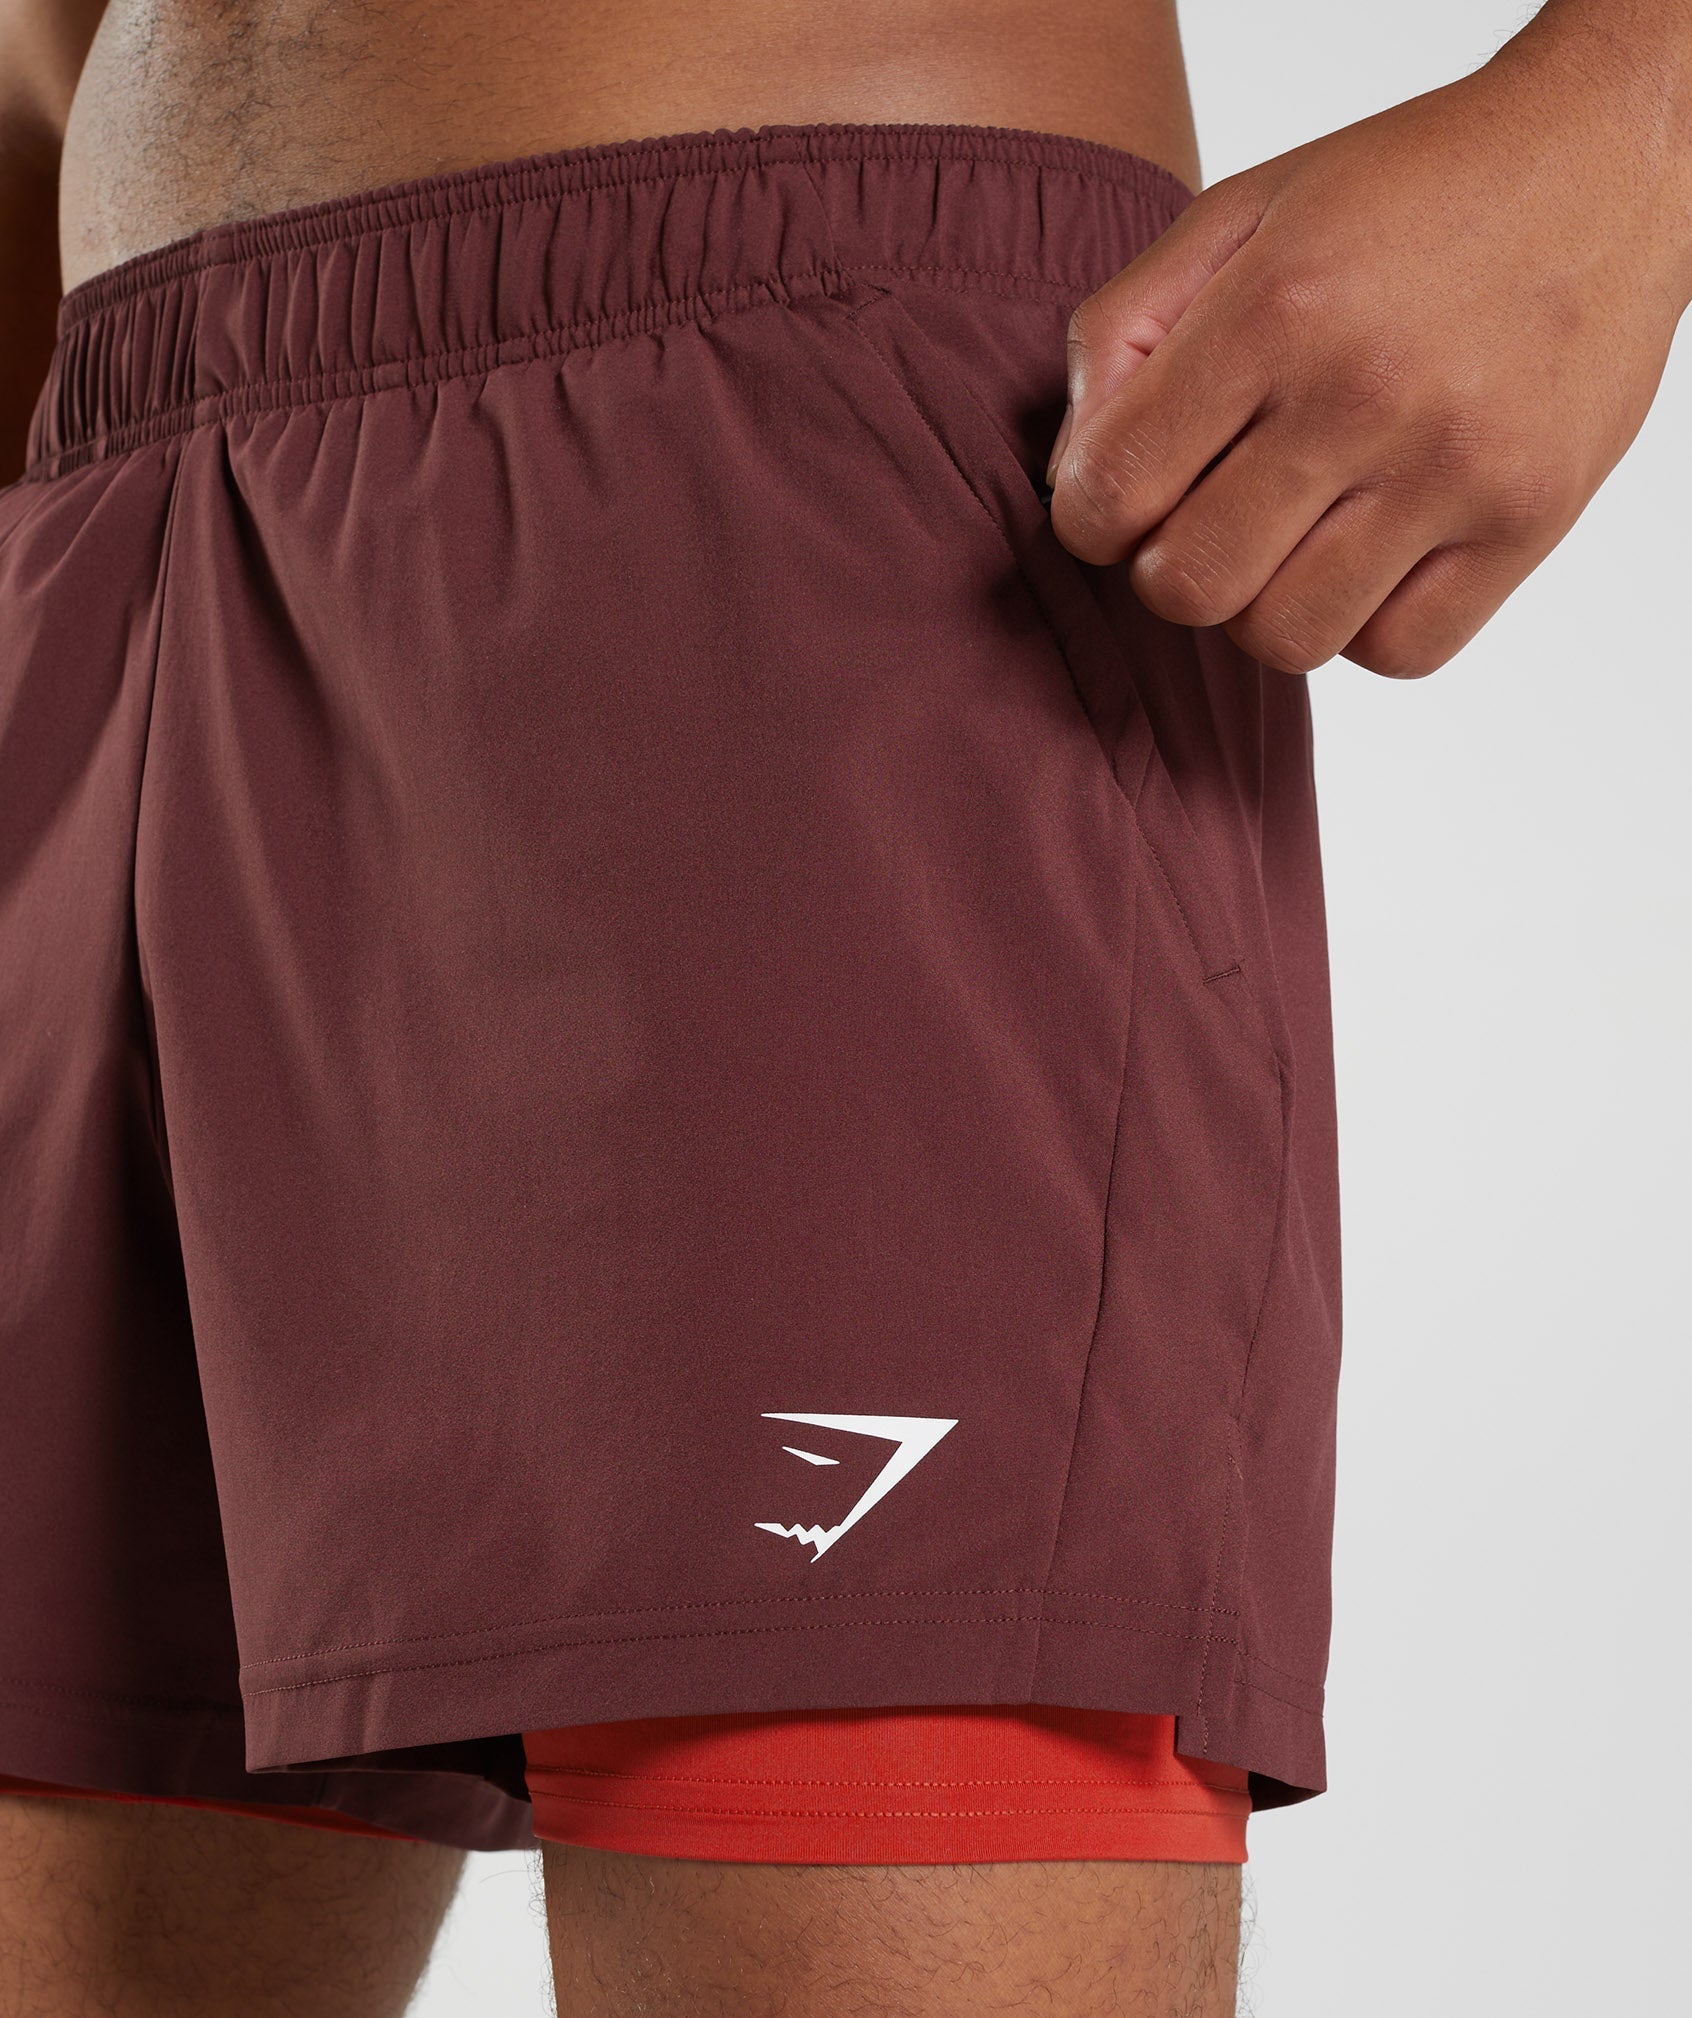 New Mens Gymshark Element 9 Mesh Shorts - Sports Red - Medium